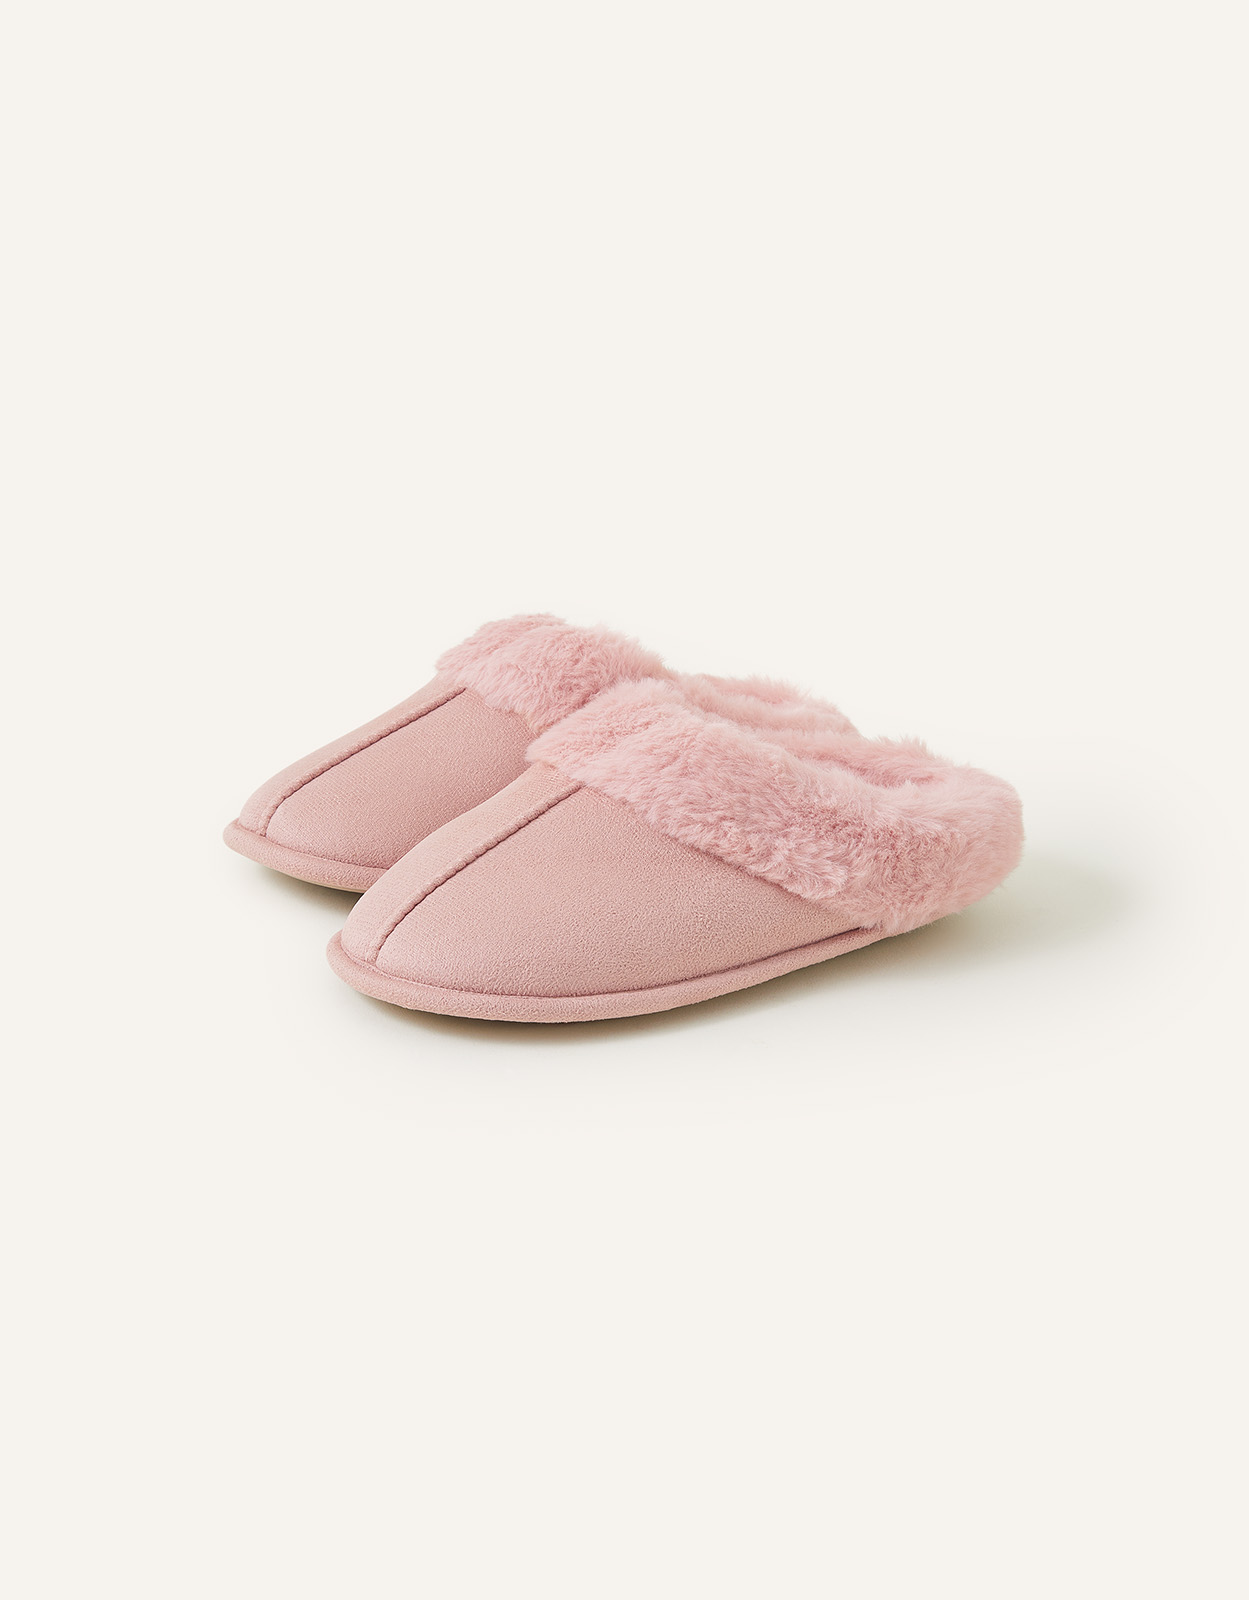 Accessorize Faux Fur Mule Slippers Pink, Size: L